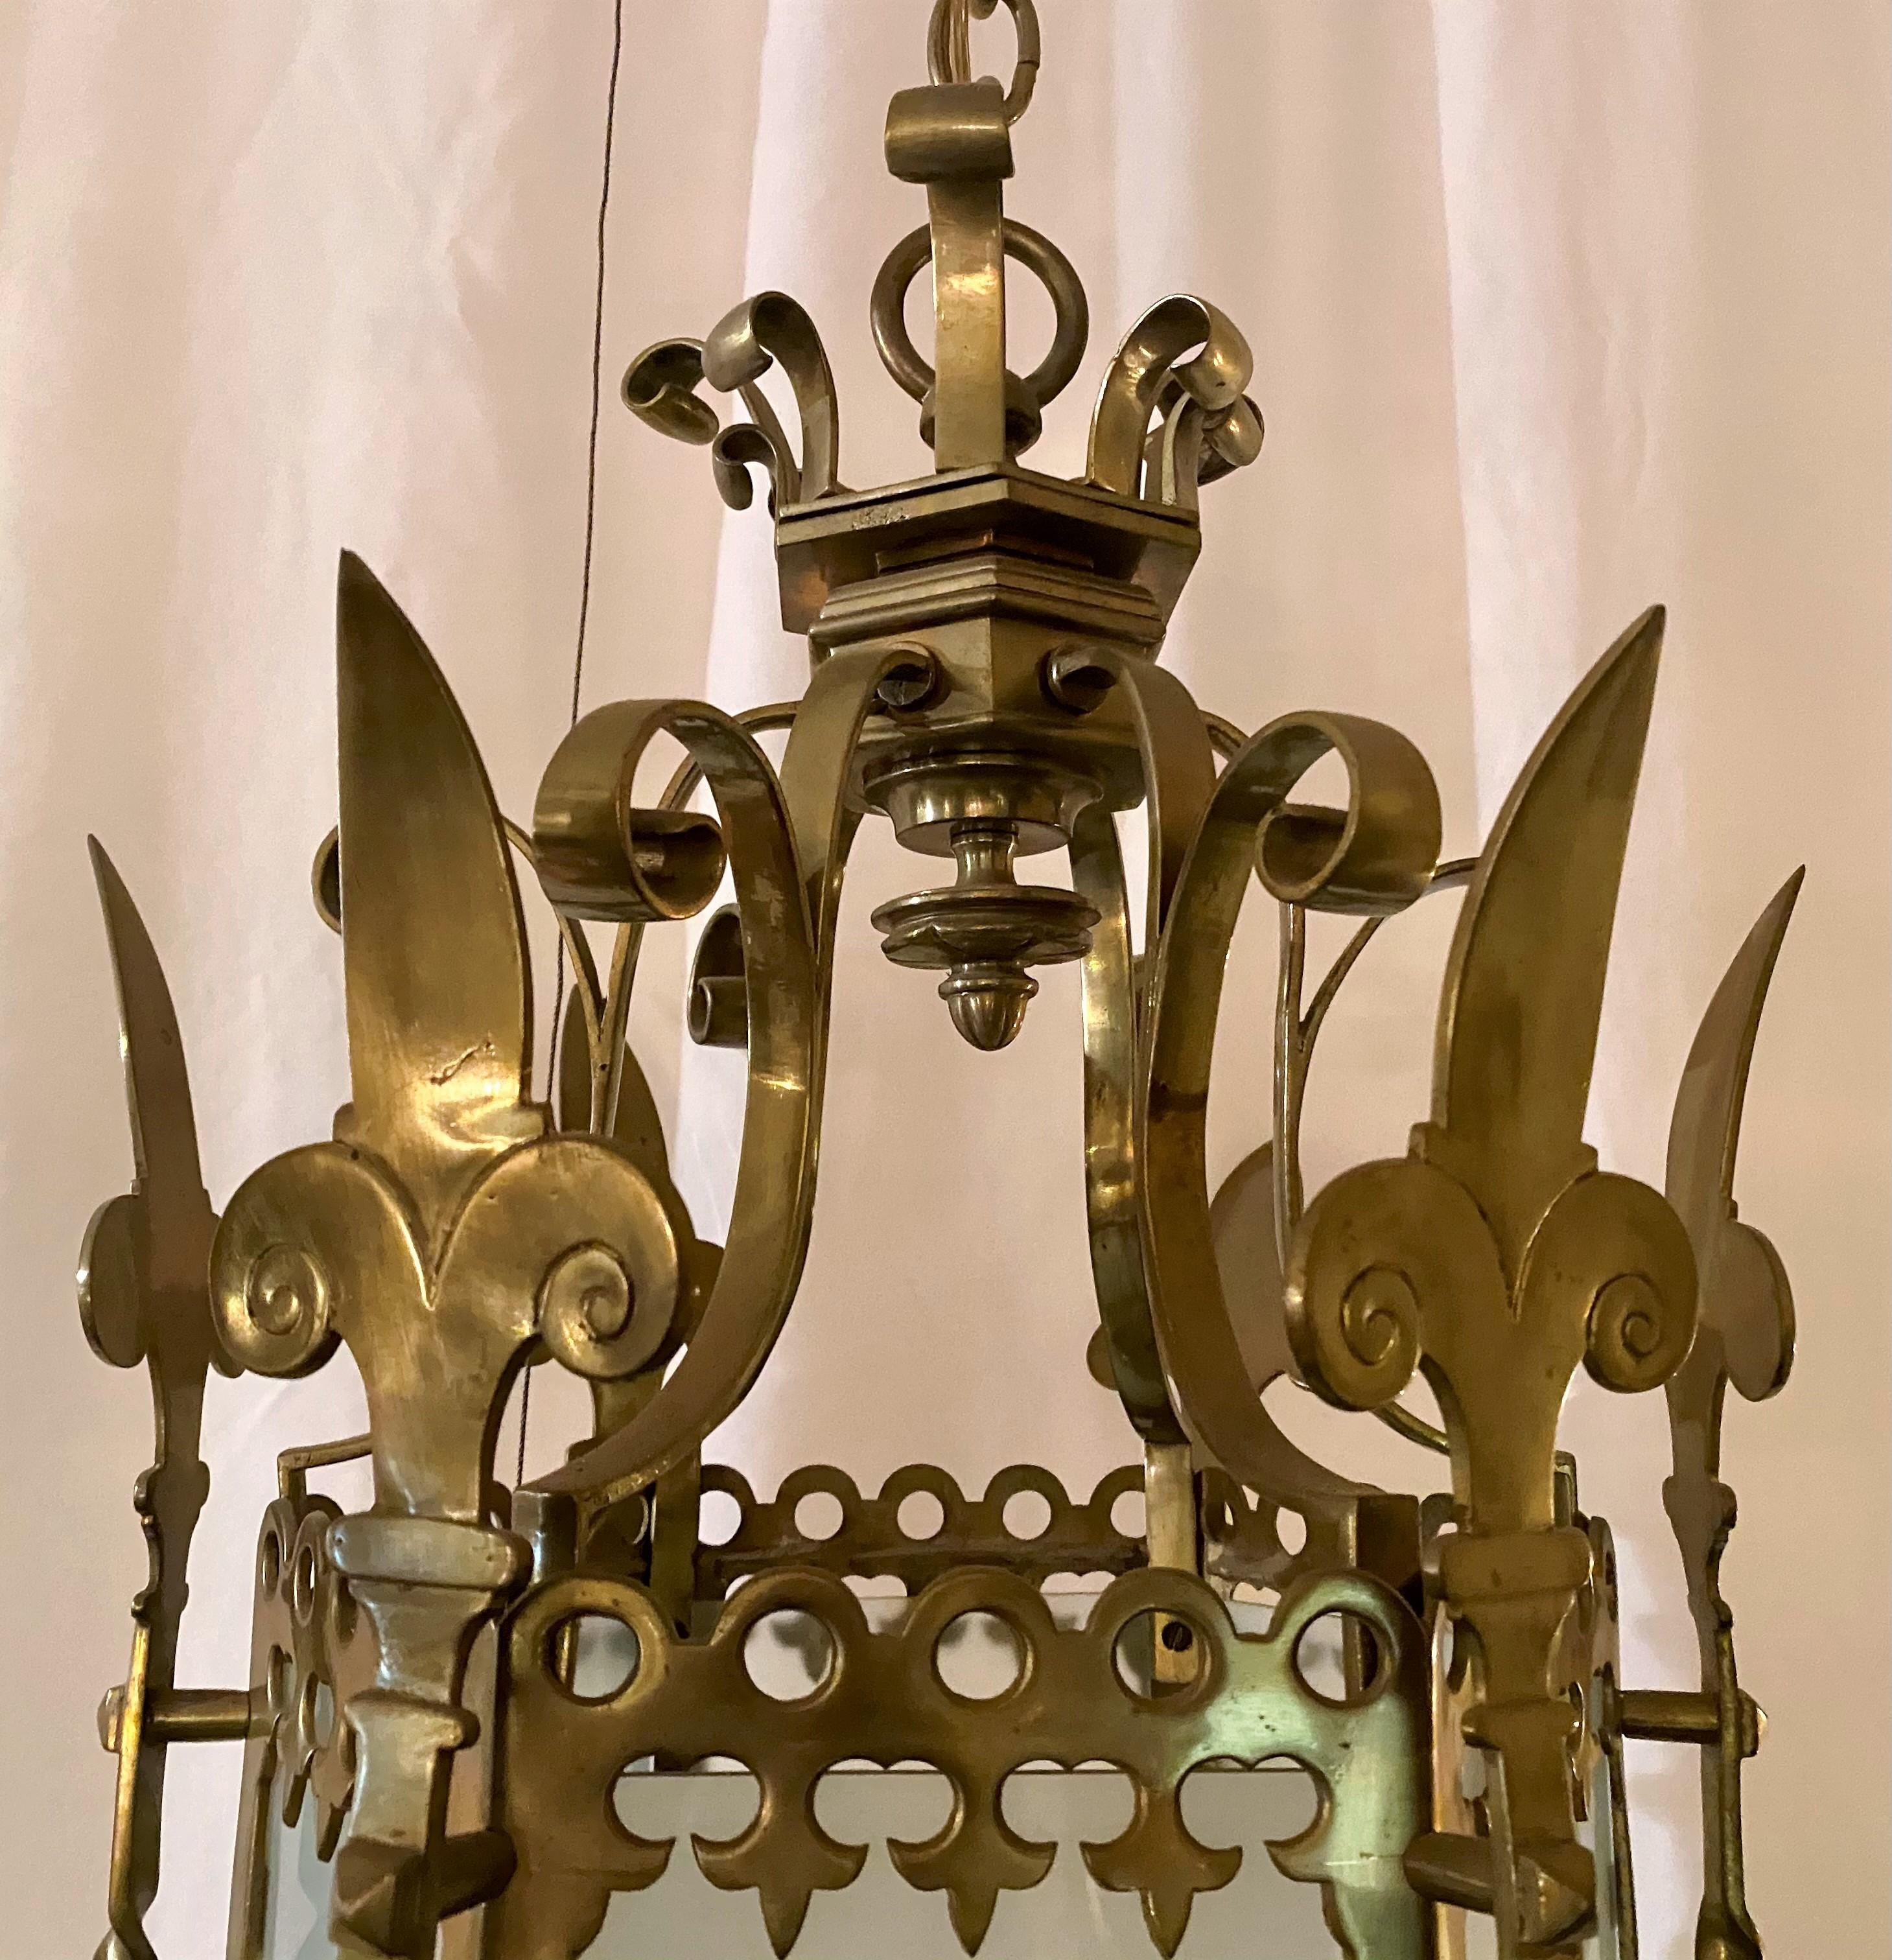 Antique 19th century French gold bronze chateau light lantern.
LAN040.